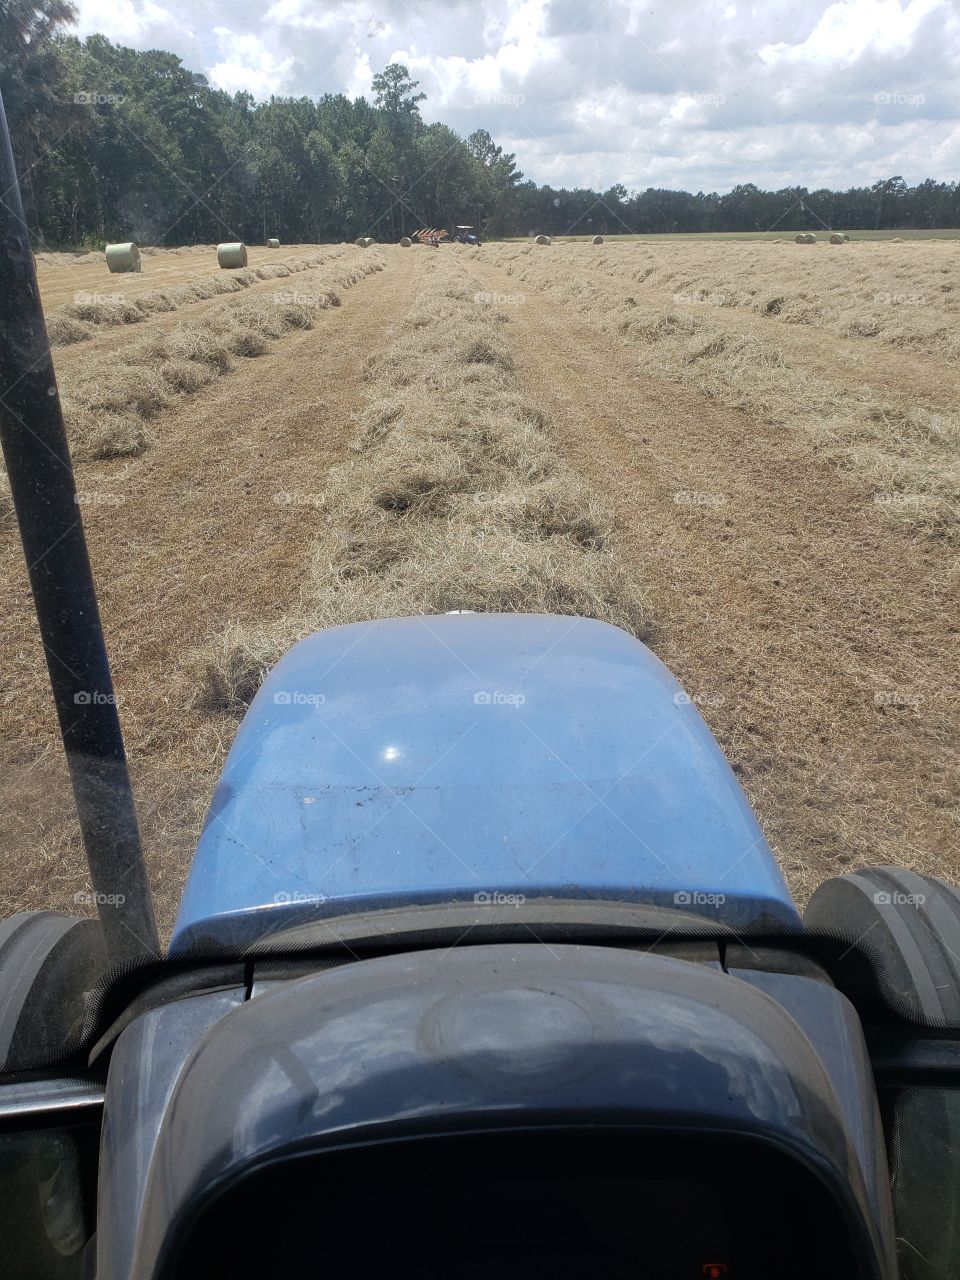 baling hay in Georgia.